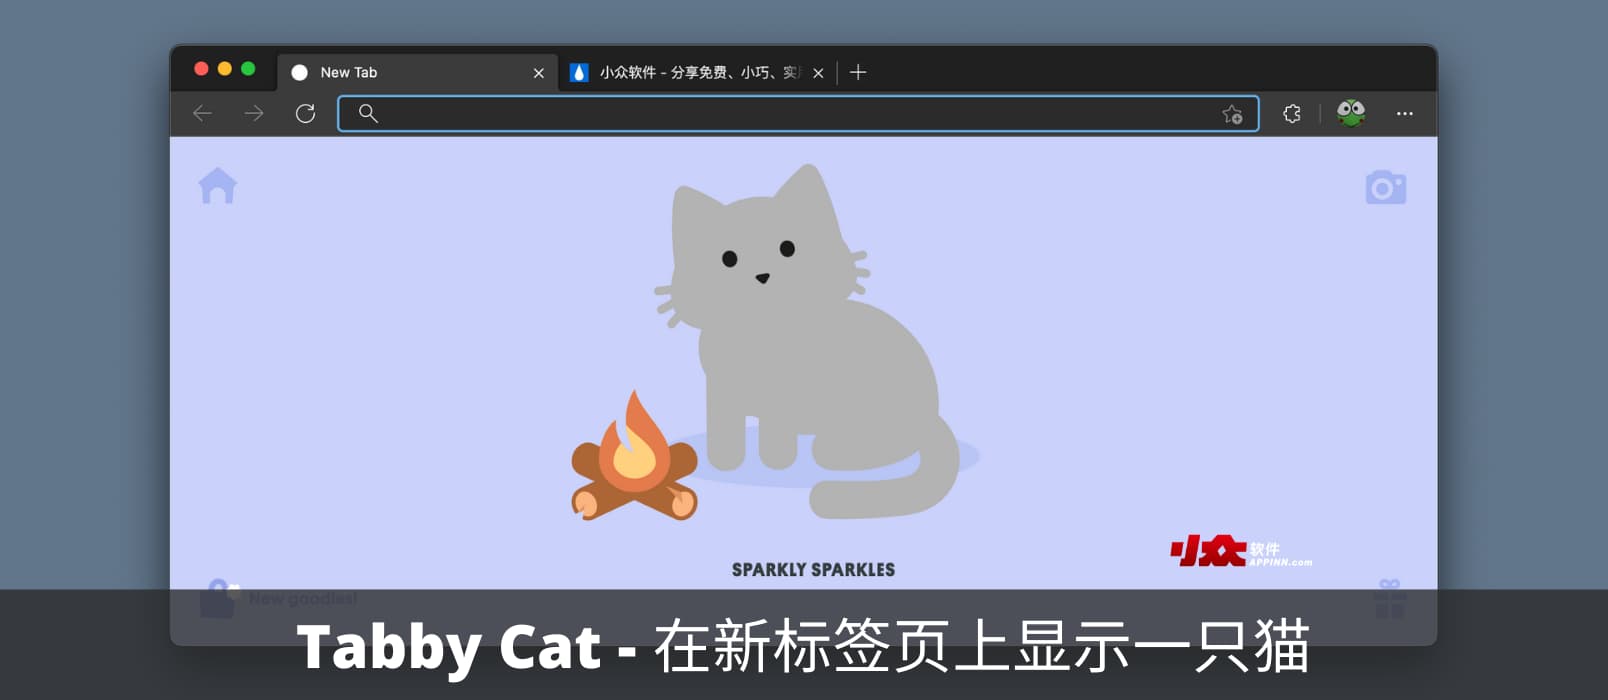 Tabby Cat - 在新标签页上显示 1 只会动的猫[Chrome 商店精选]